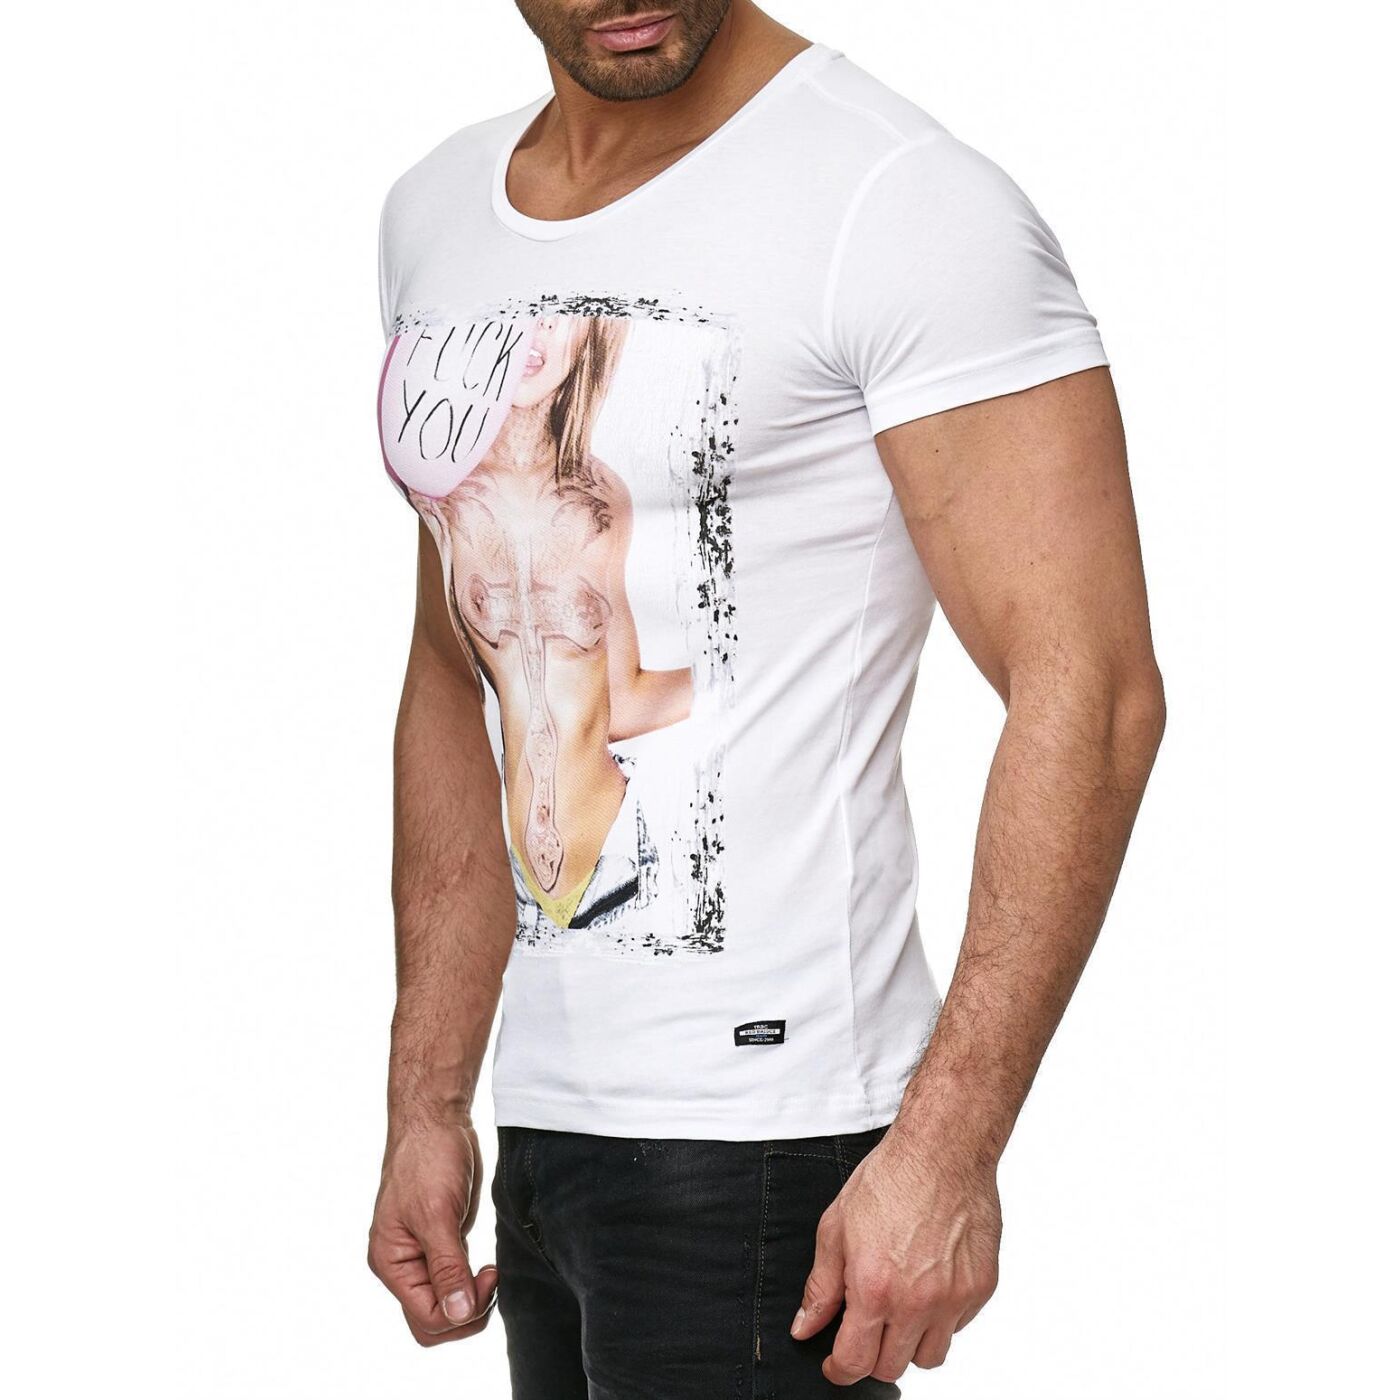 Xiloccer Fashion Men Casual T-Shirt 3D Print Tee Short Sleeve O-Neck Tops Blouse